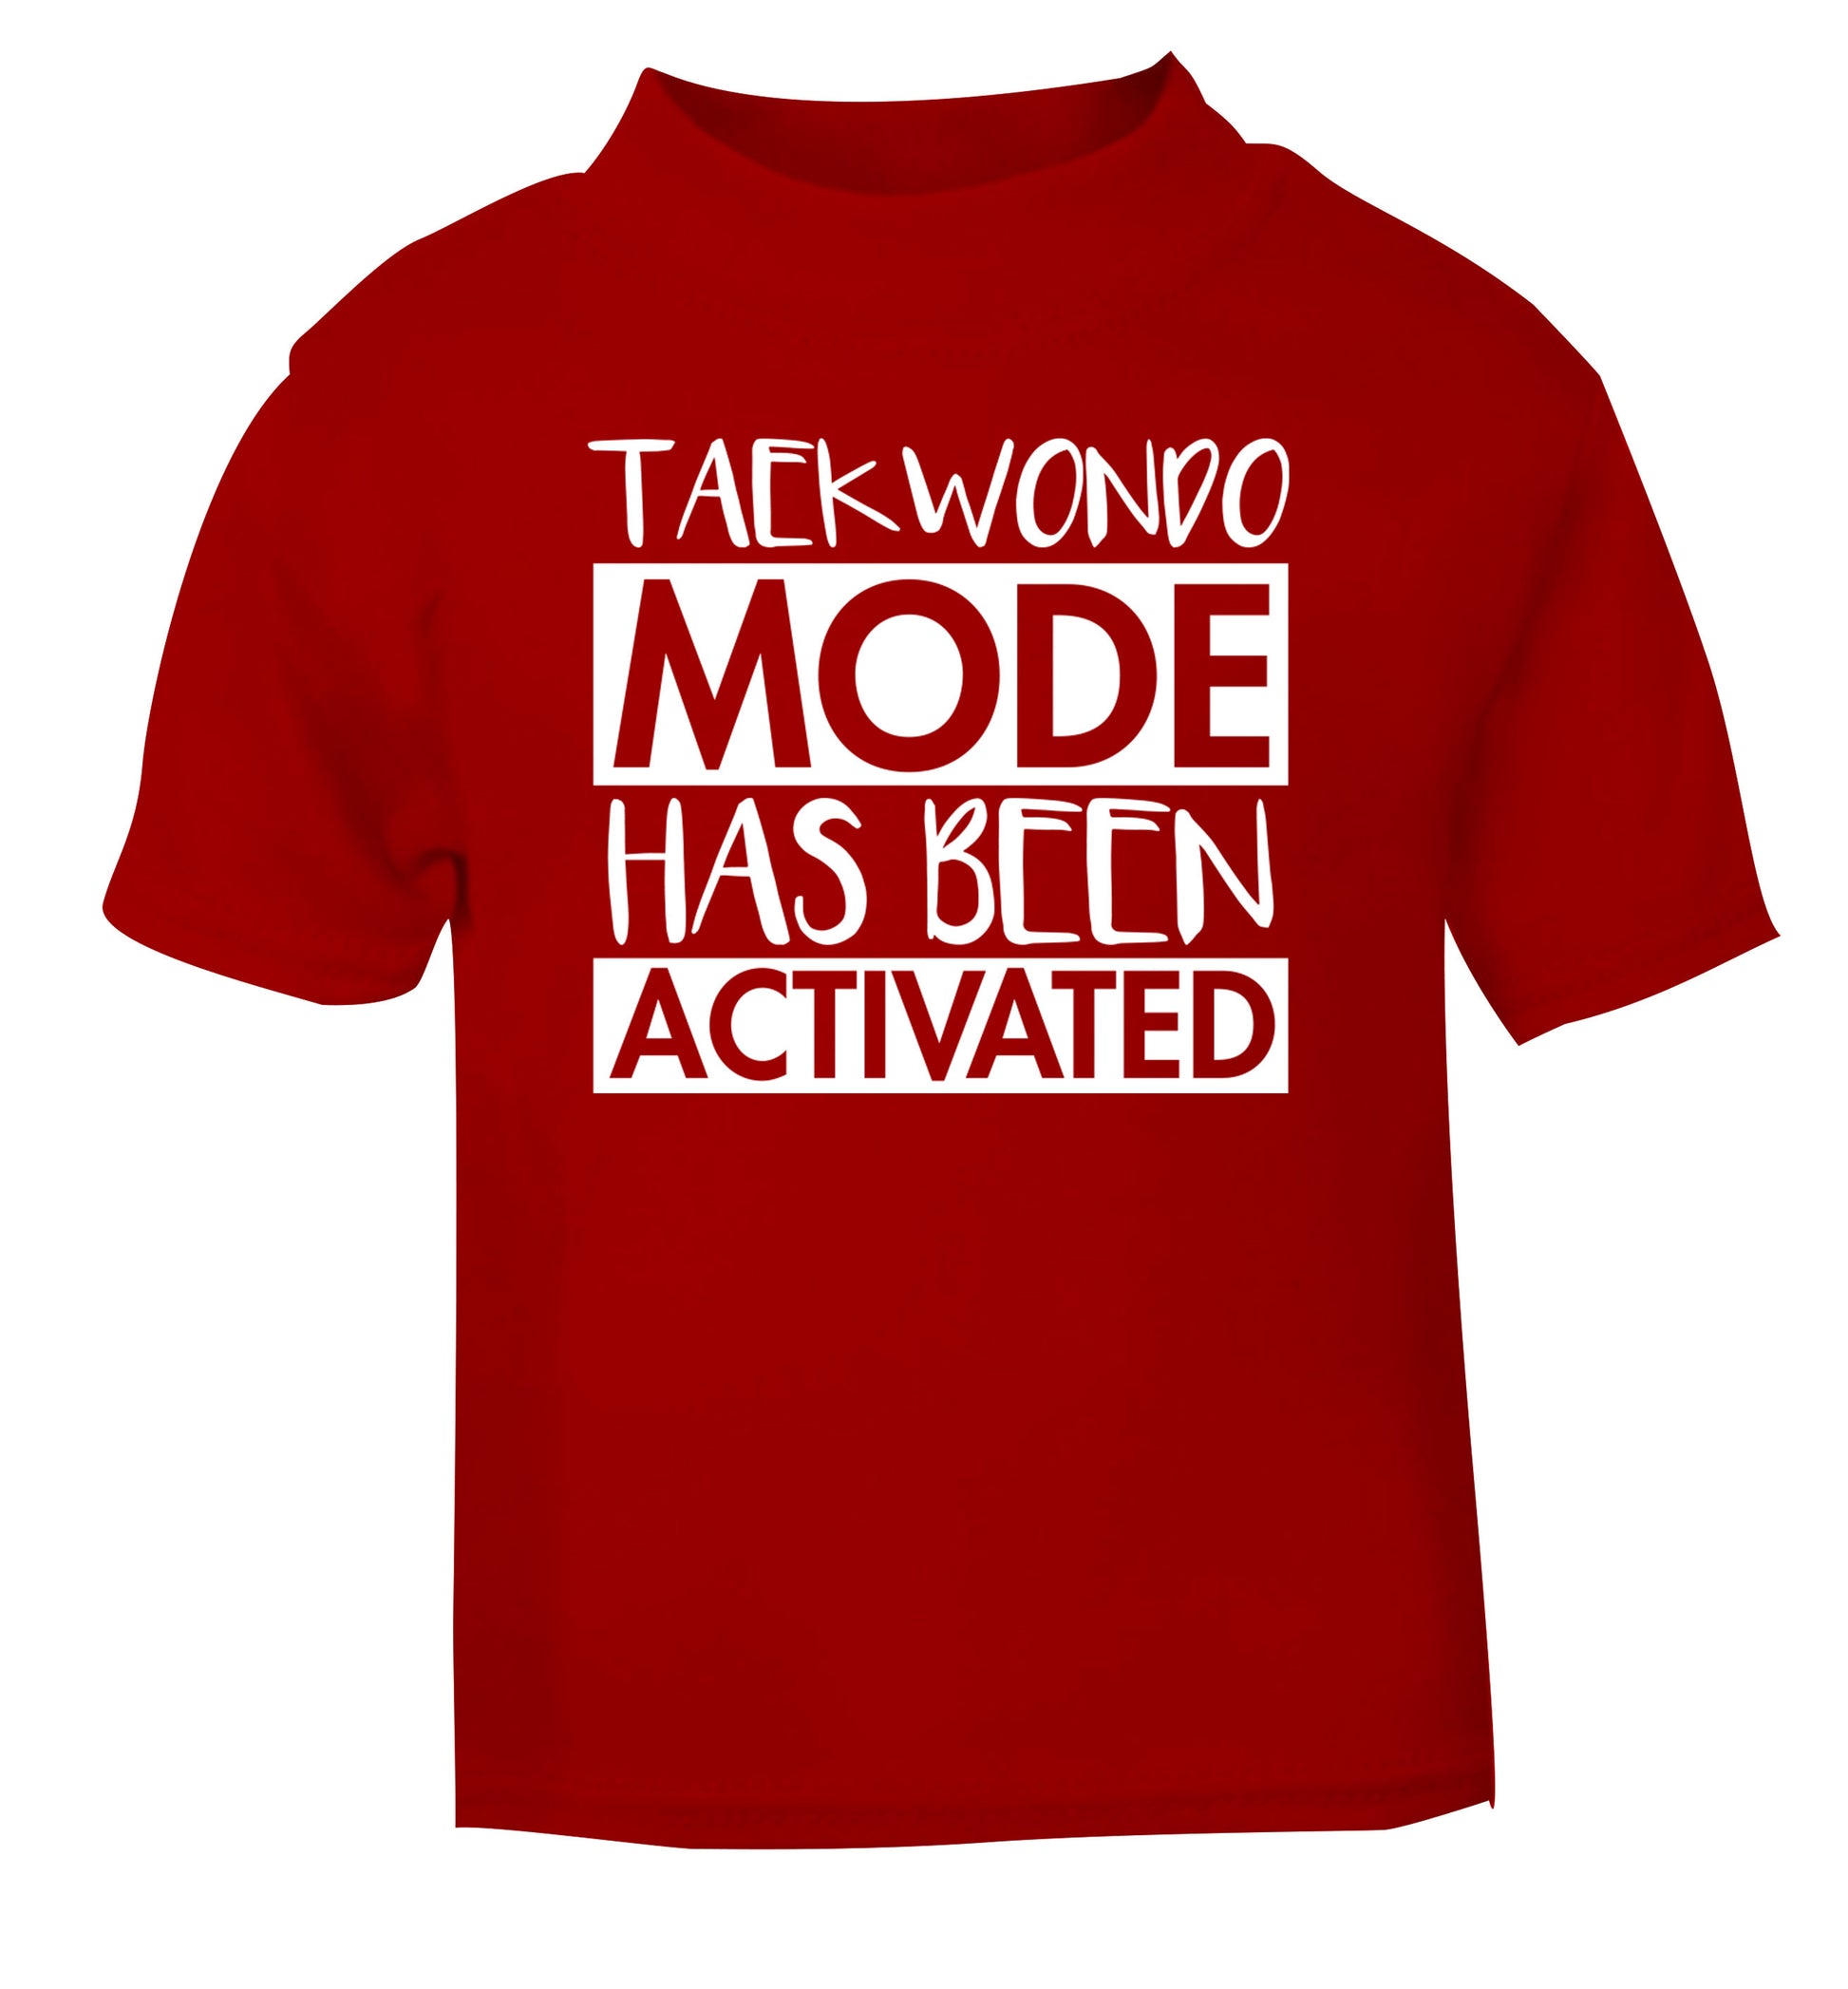 Taekwondo mode activated red Baby Toddler Tshirt 2 Years